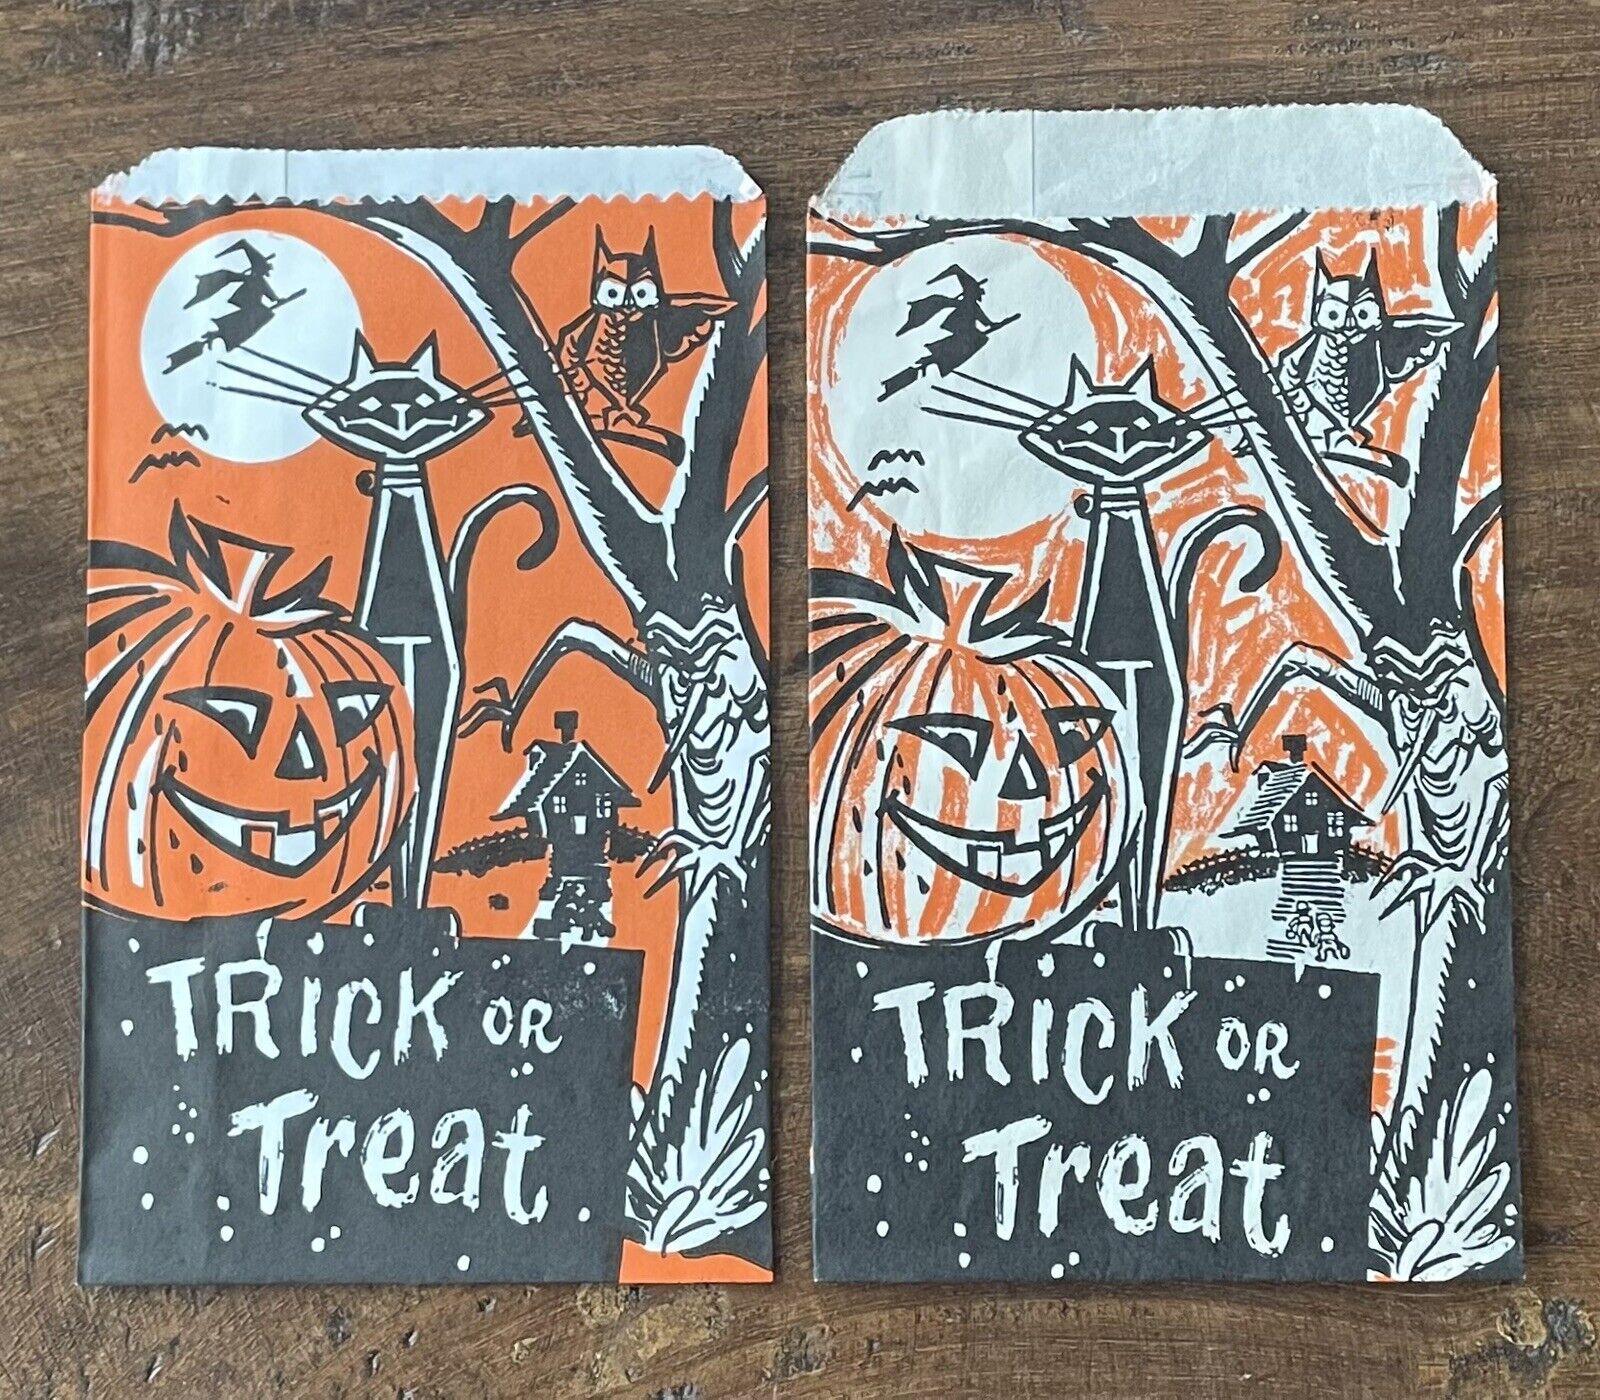 Vintage 1960s Halloween Paper Trick or Treat Handout Bag Set • Variants